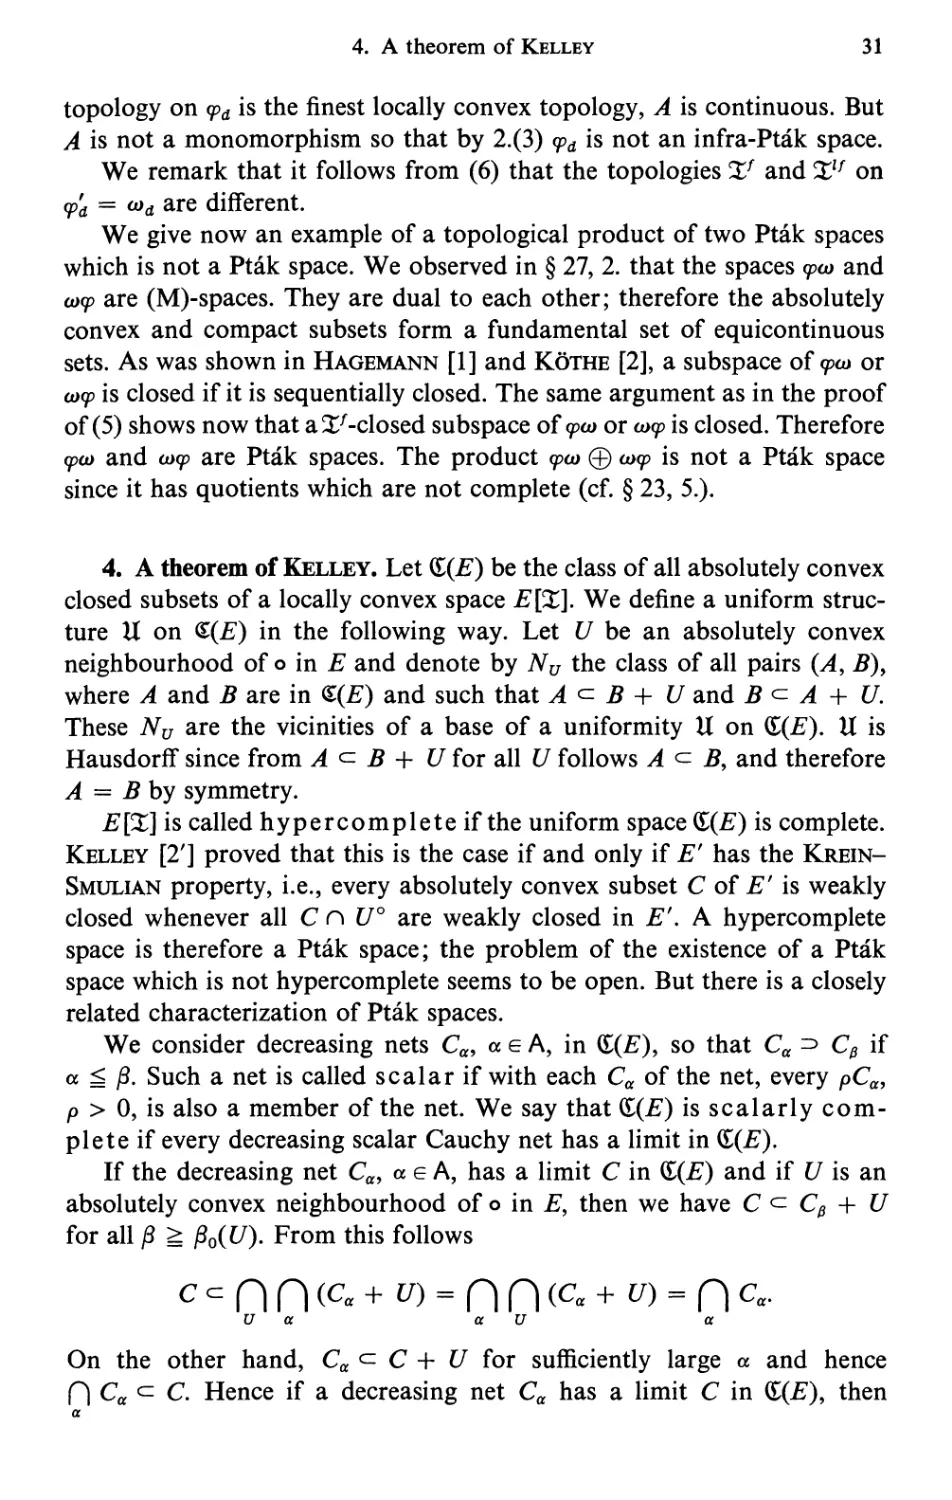 4. A theorem of Kelley